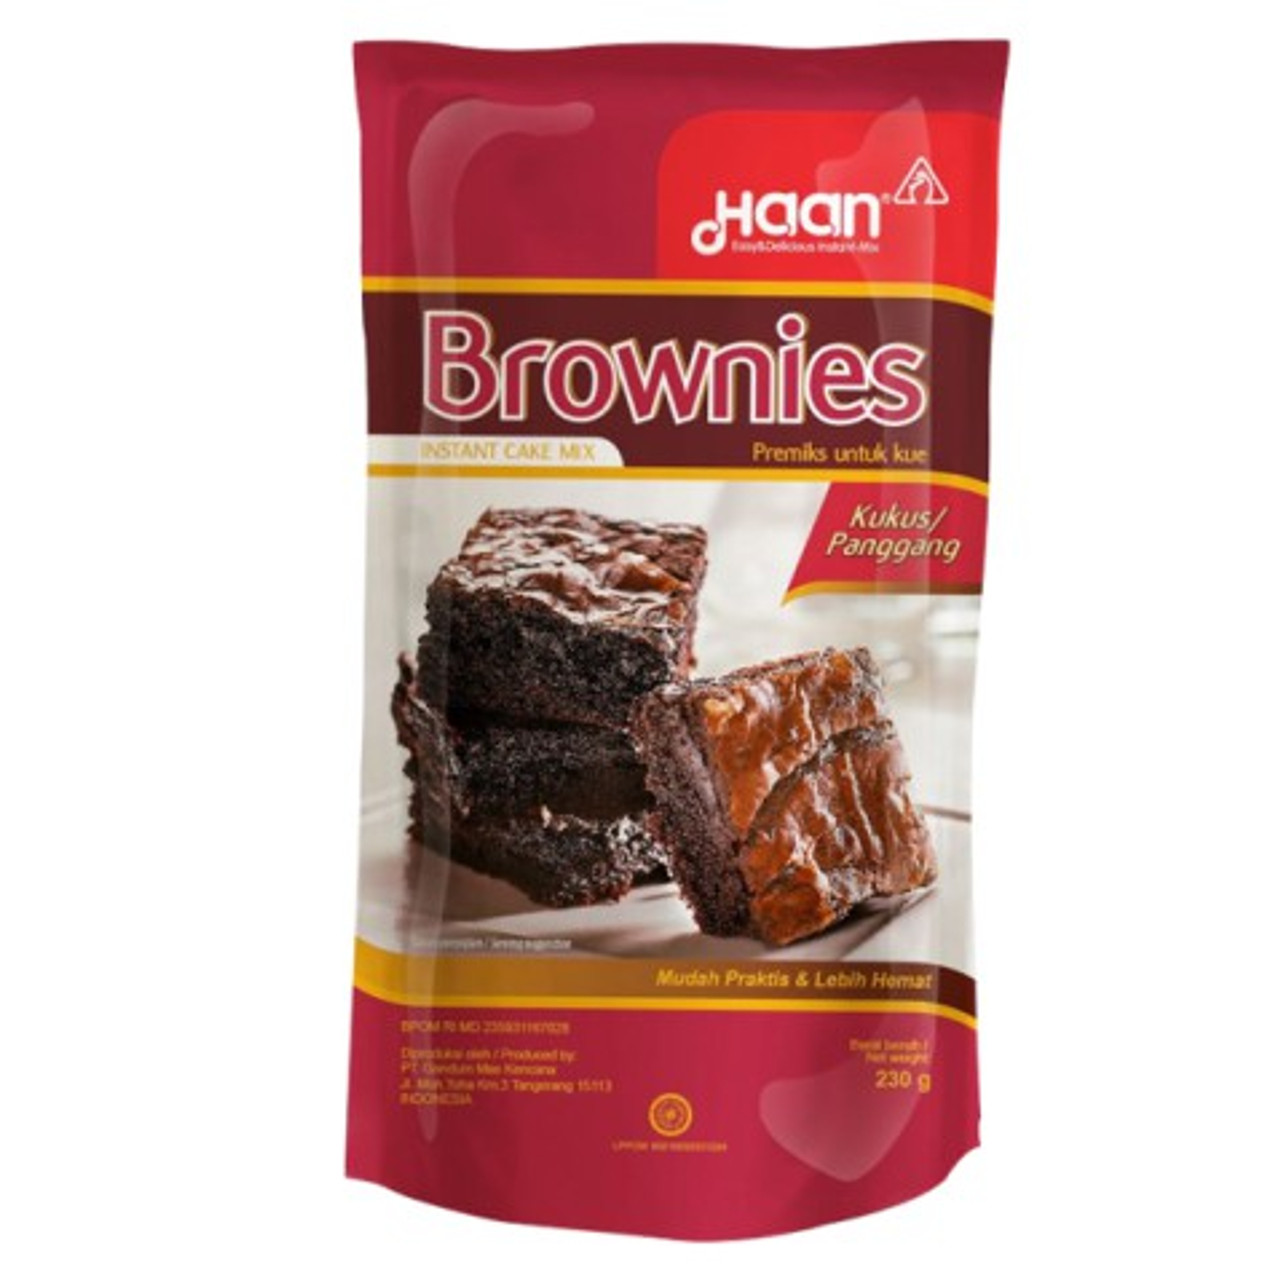 Haan Brownies, 230gr